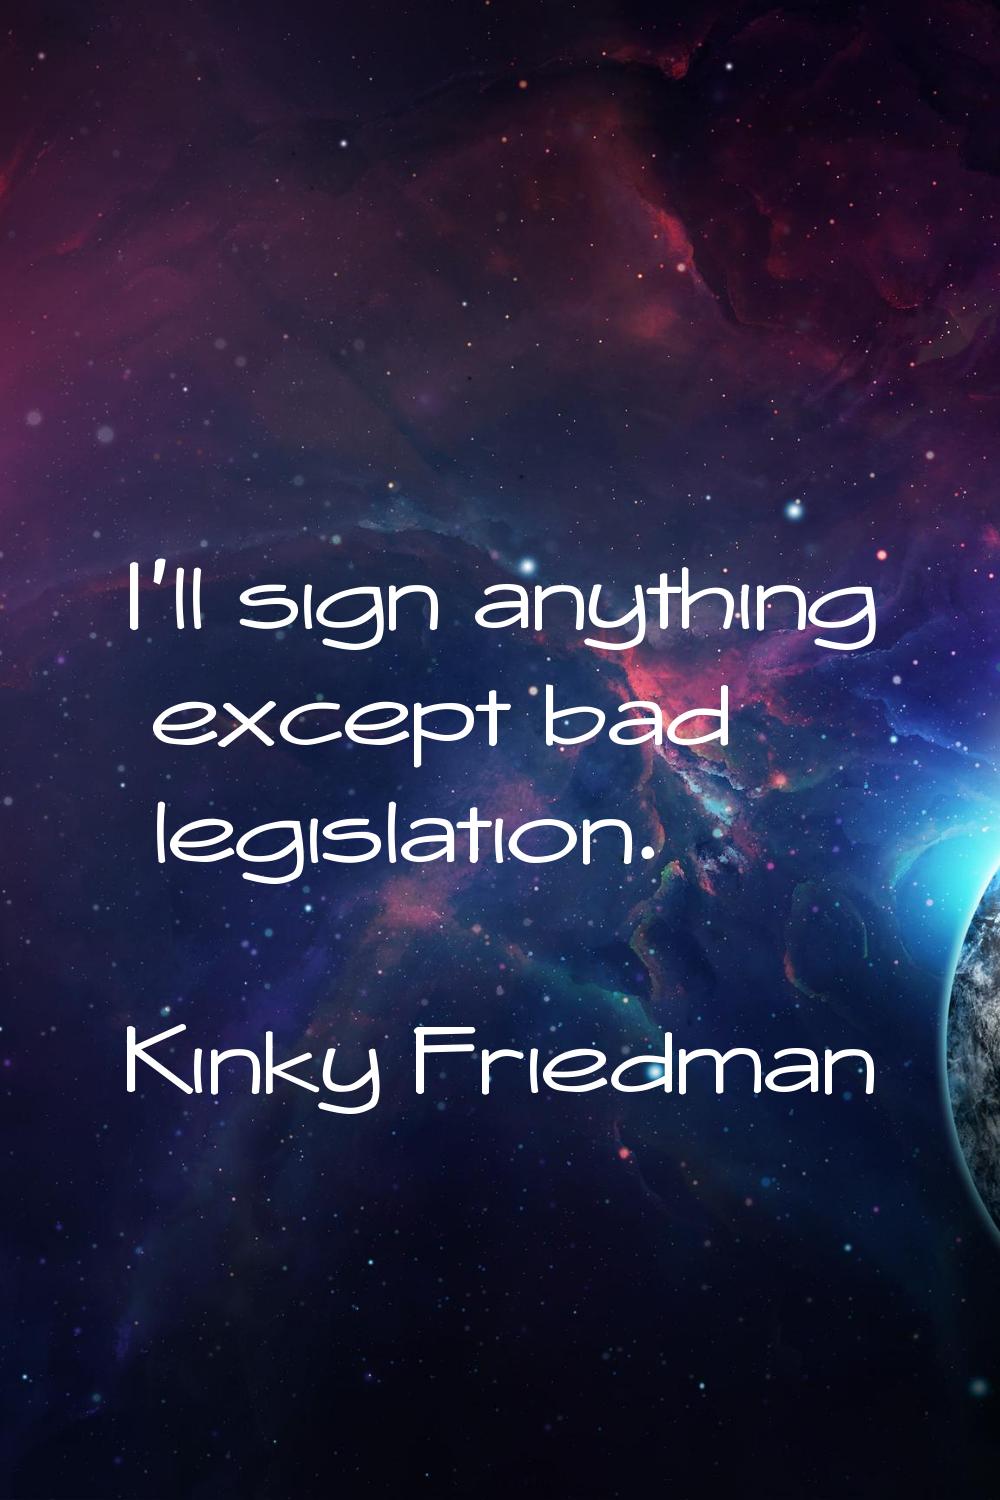 I'll sign anything except bad legislation.